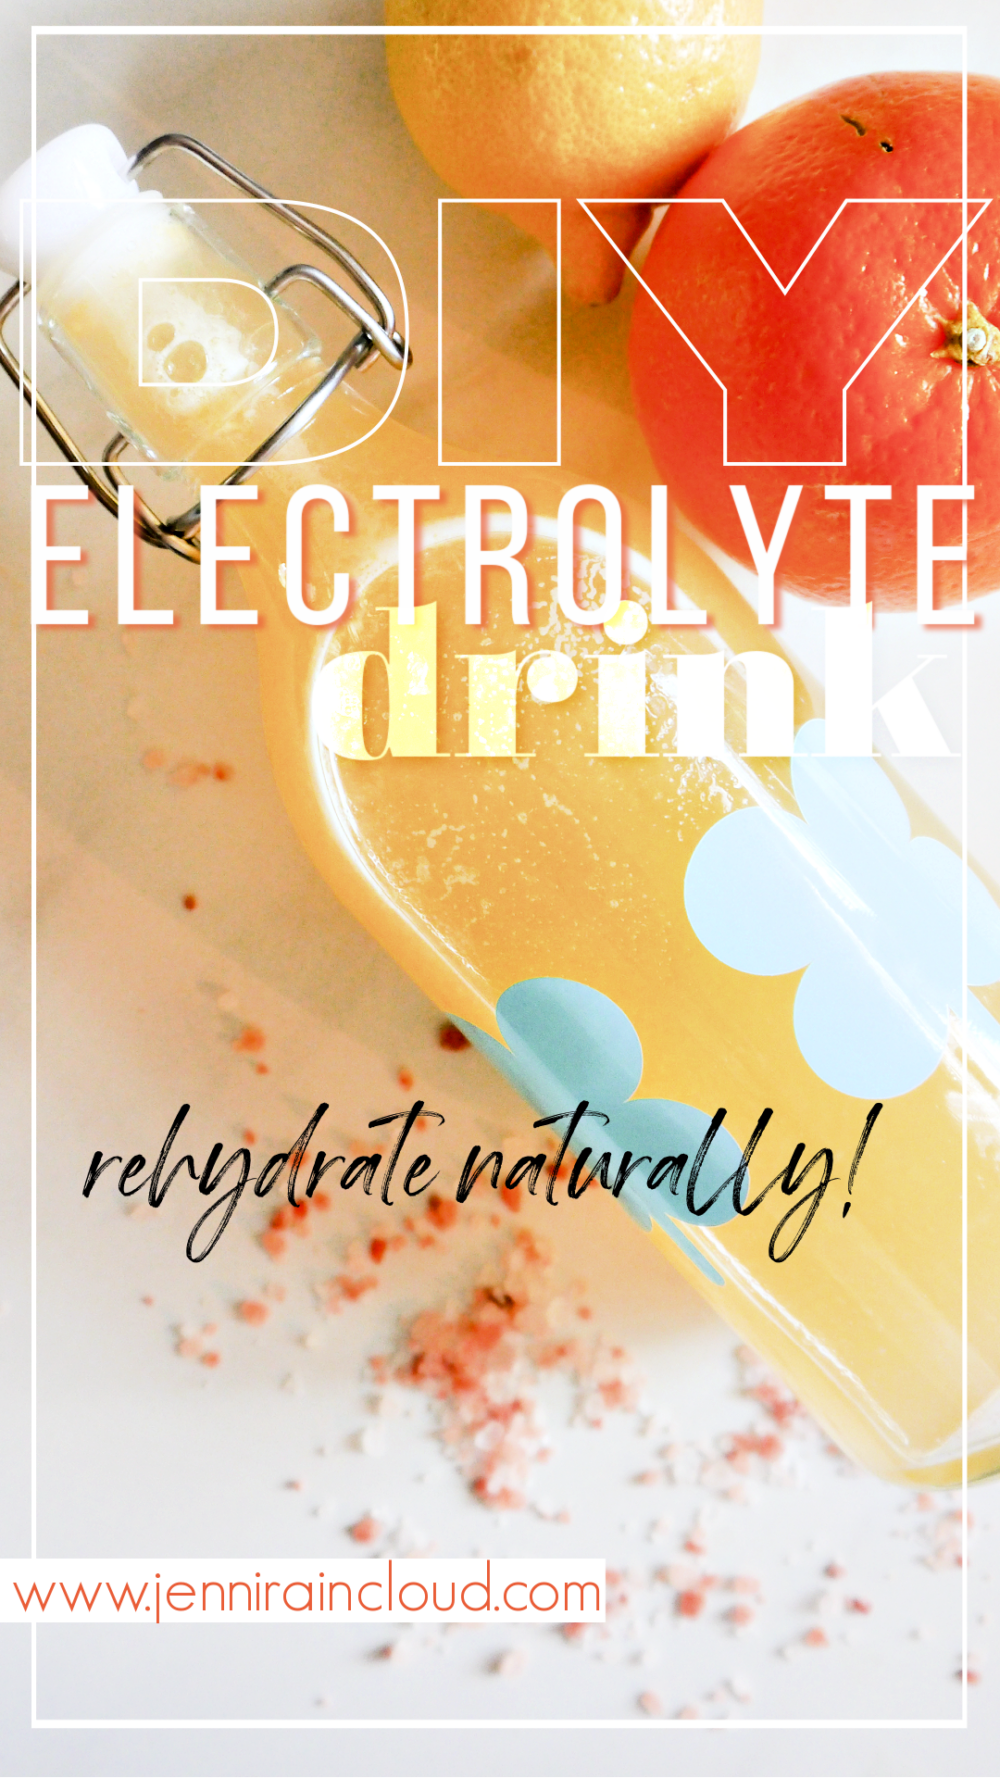 Homemade Electrolyte Drink